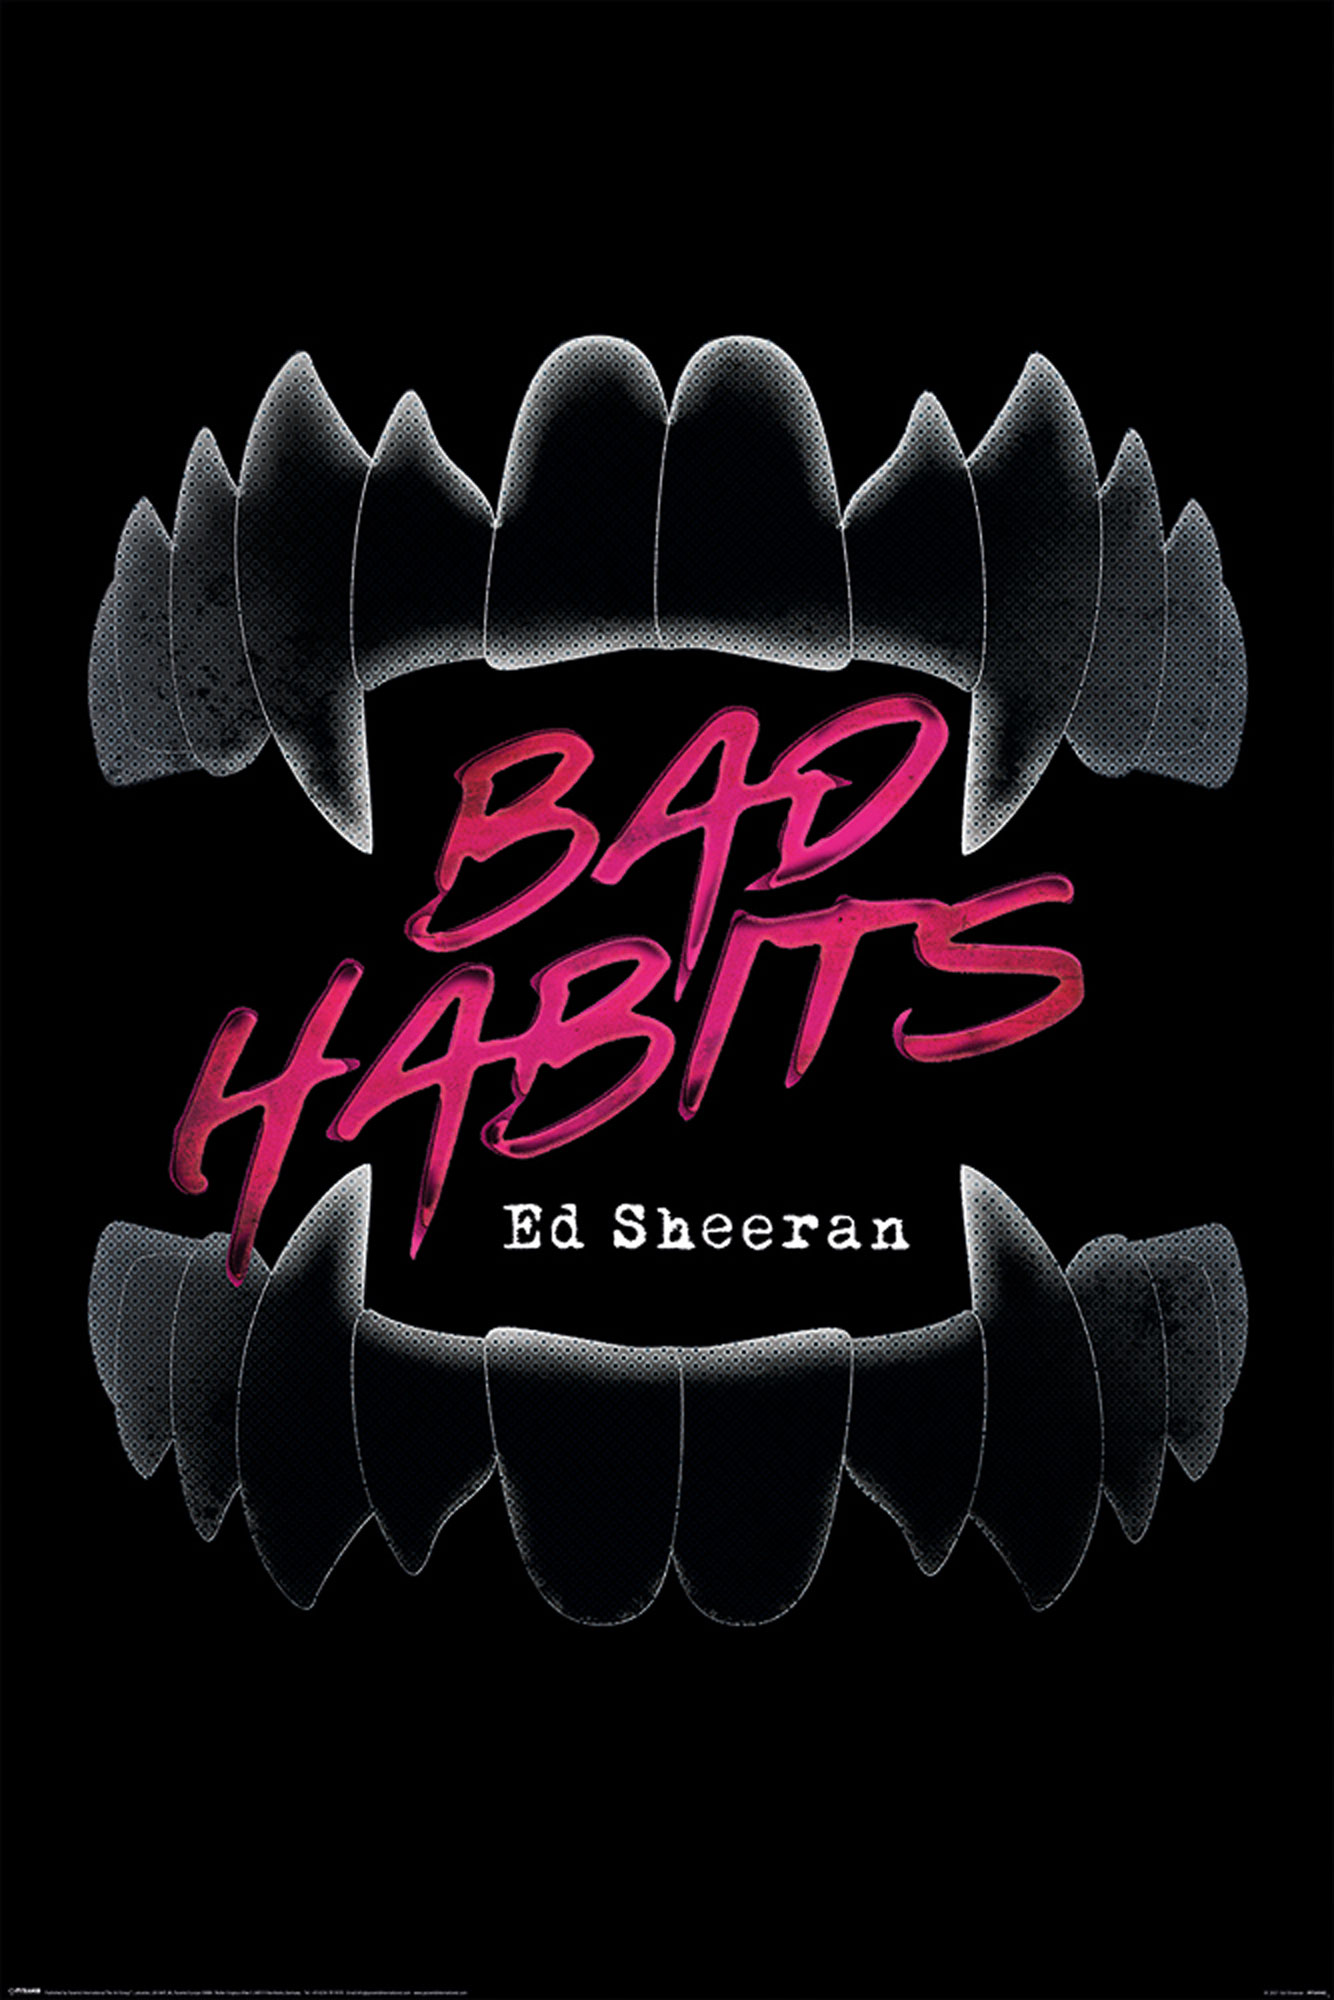 Bad Ed - Sheeran, Habits